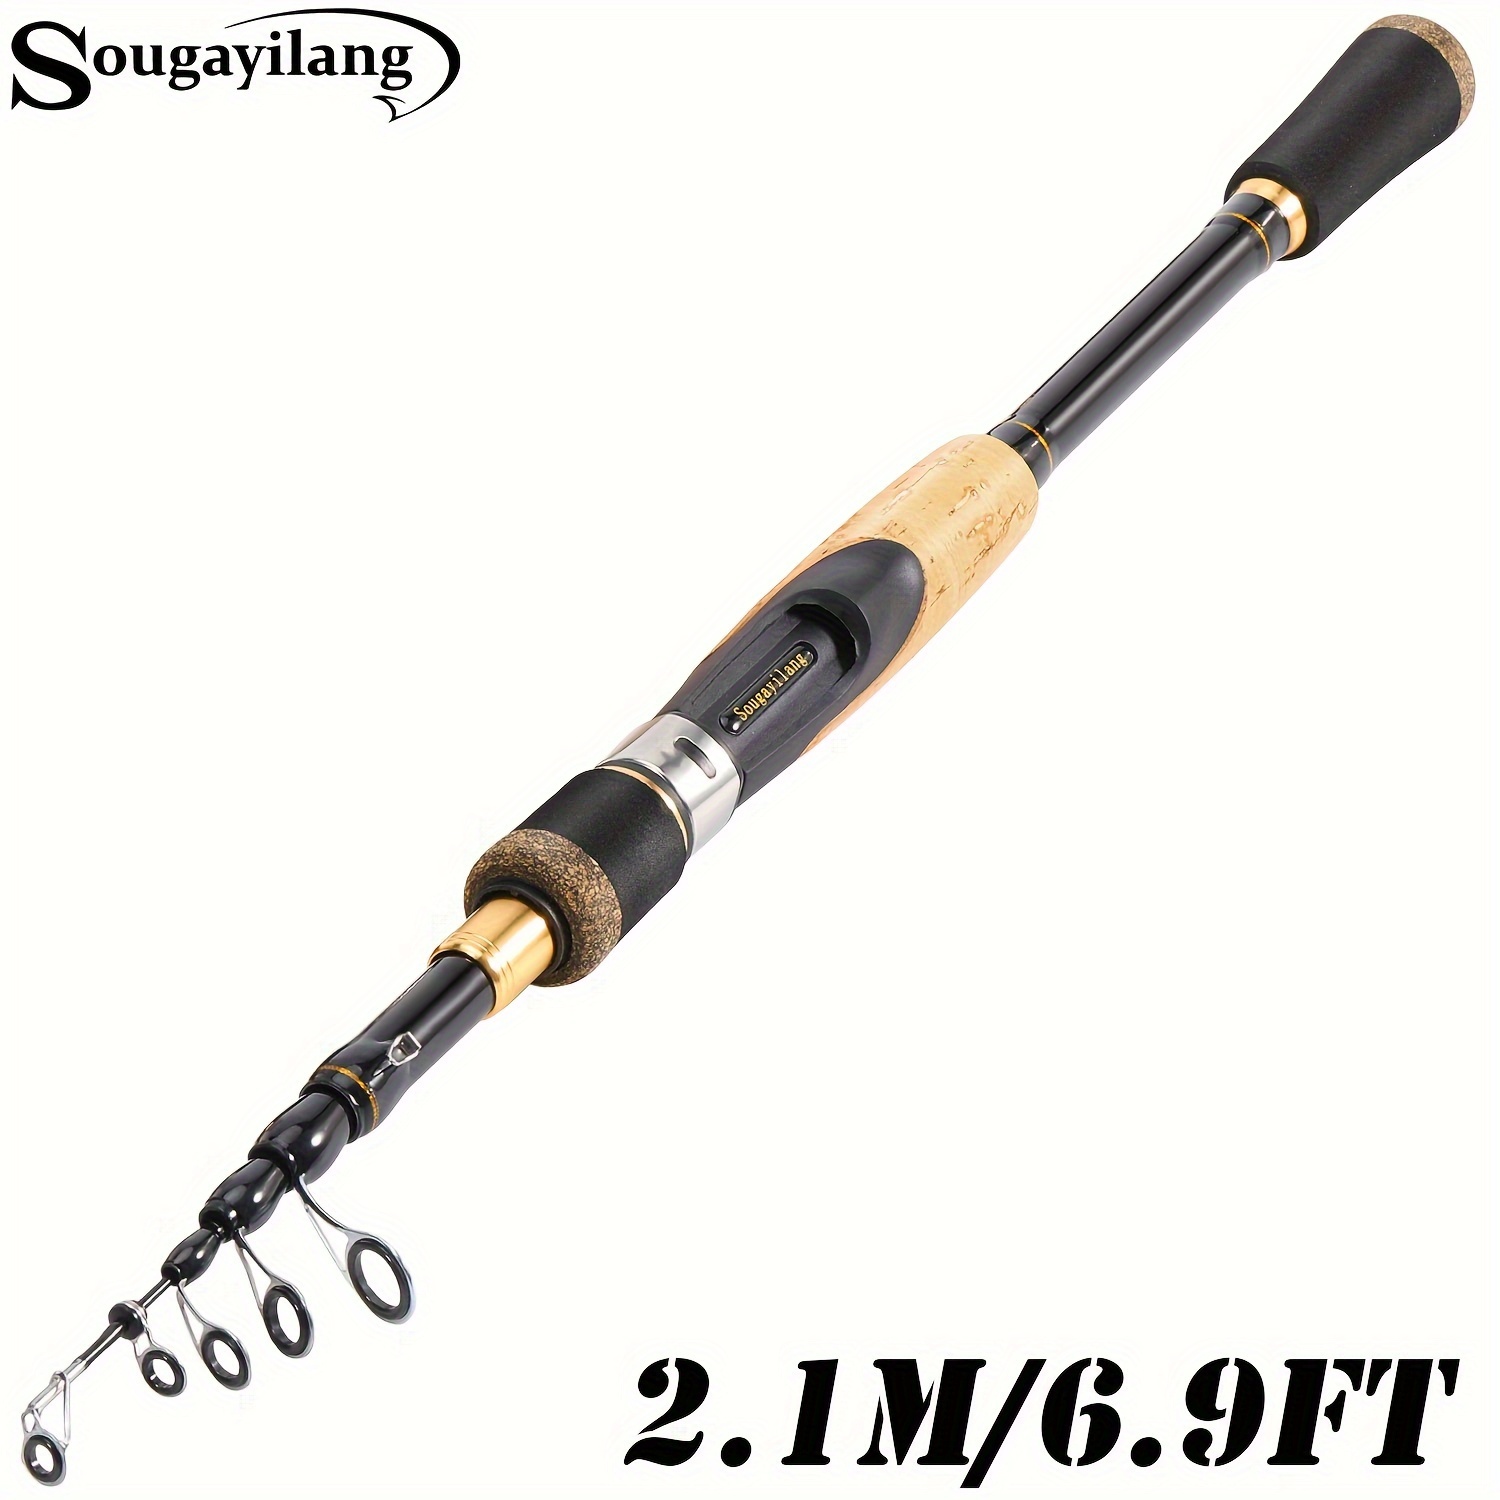 Sougayilang 1.6M Fishing Rods Spinning or Casting Fishing Pole